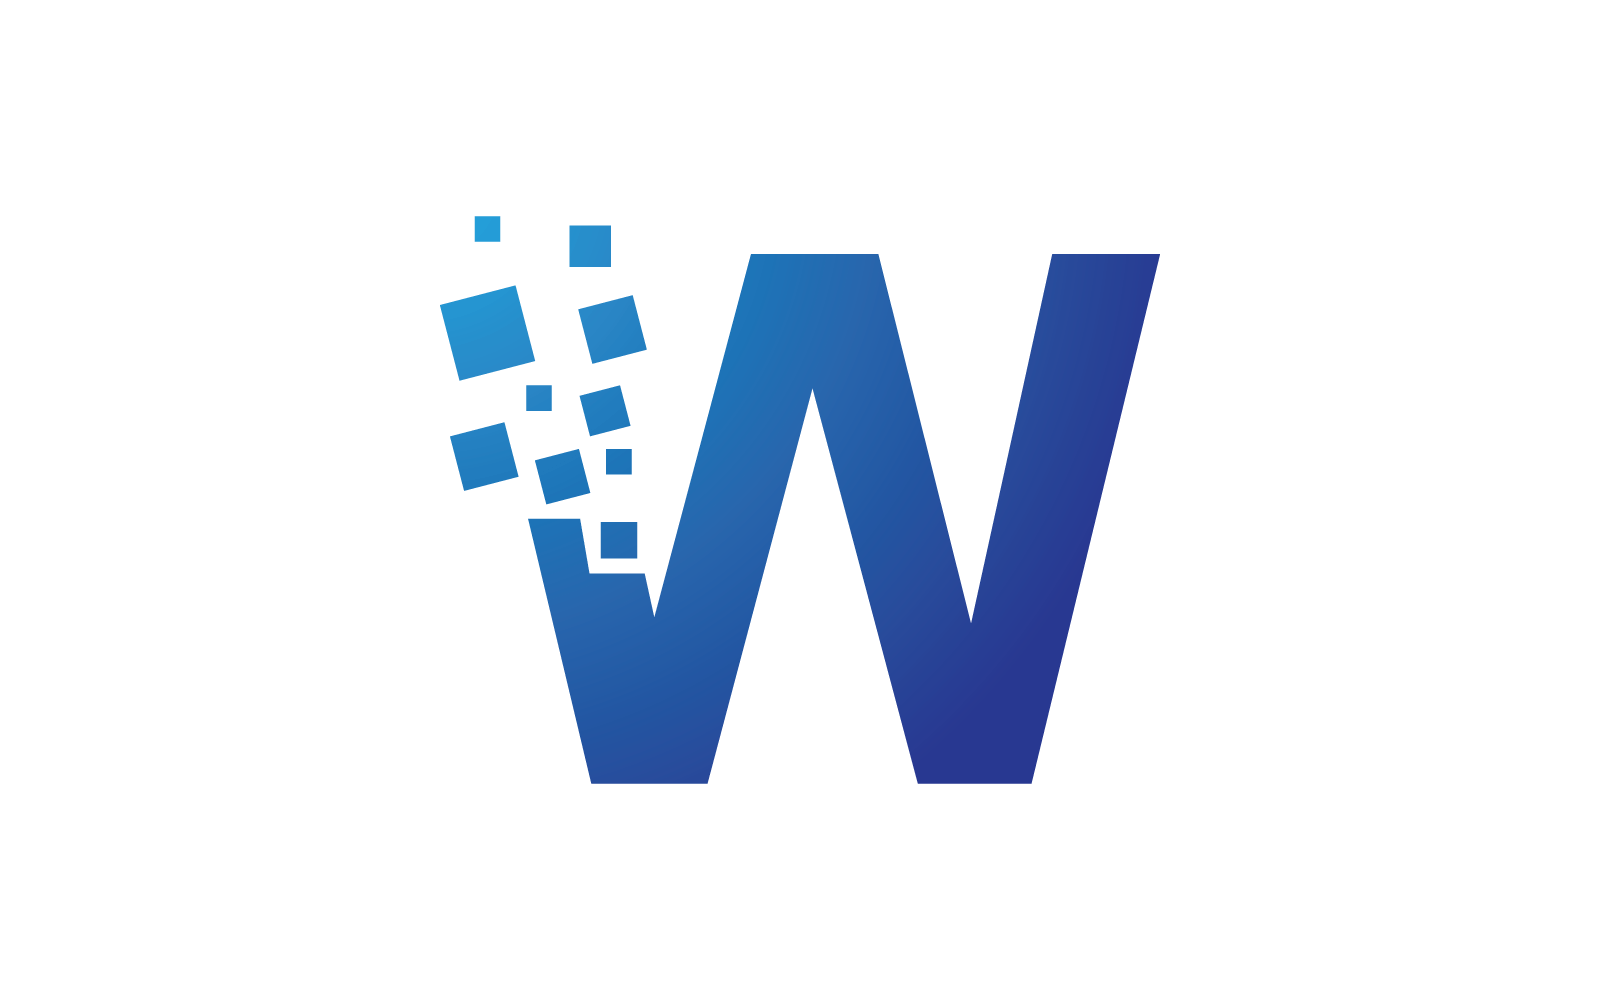 W Initial letter alphabet pixel style logo vector design